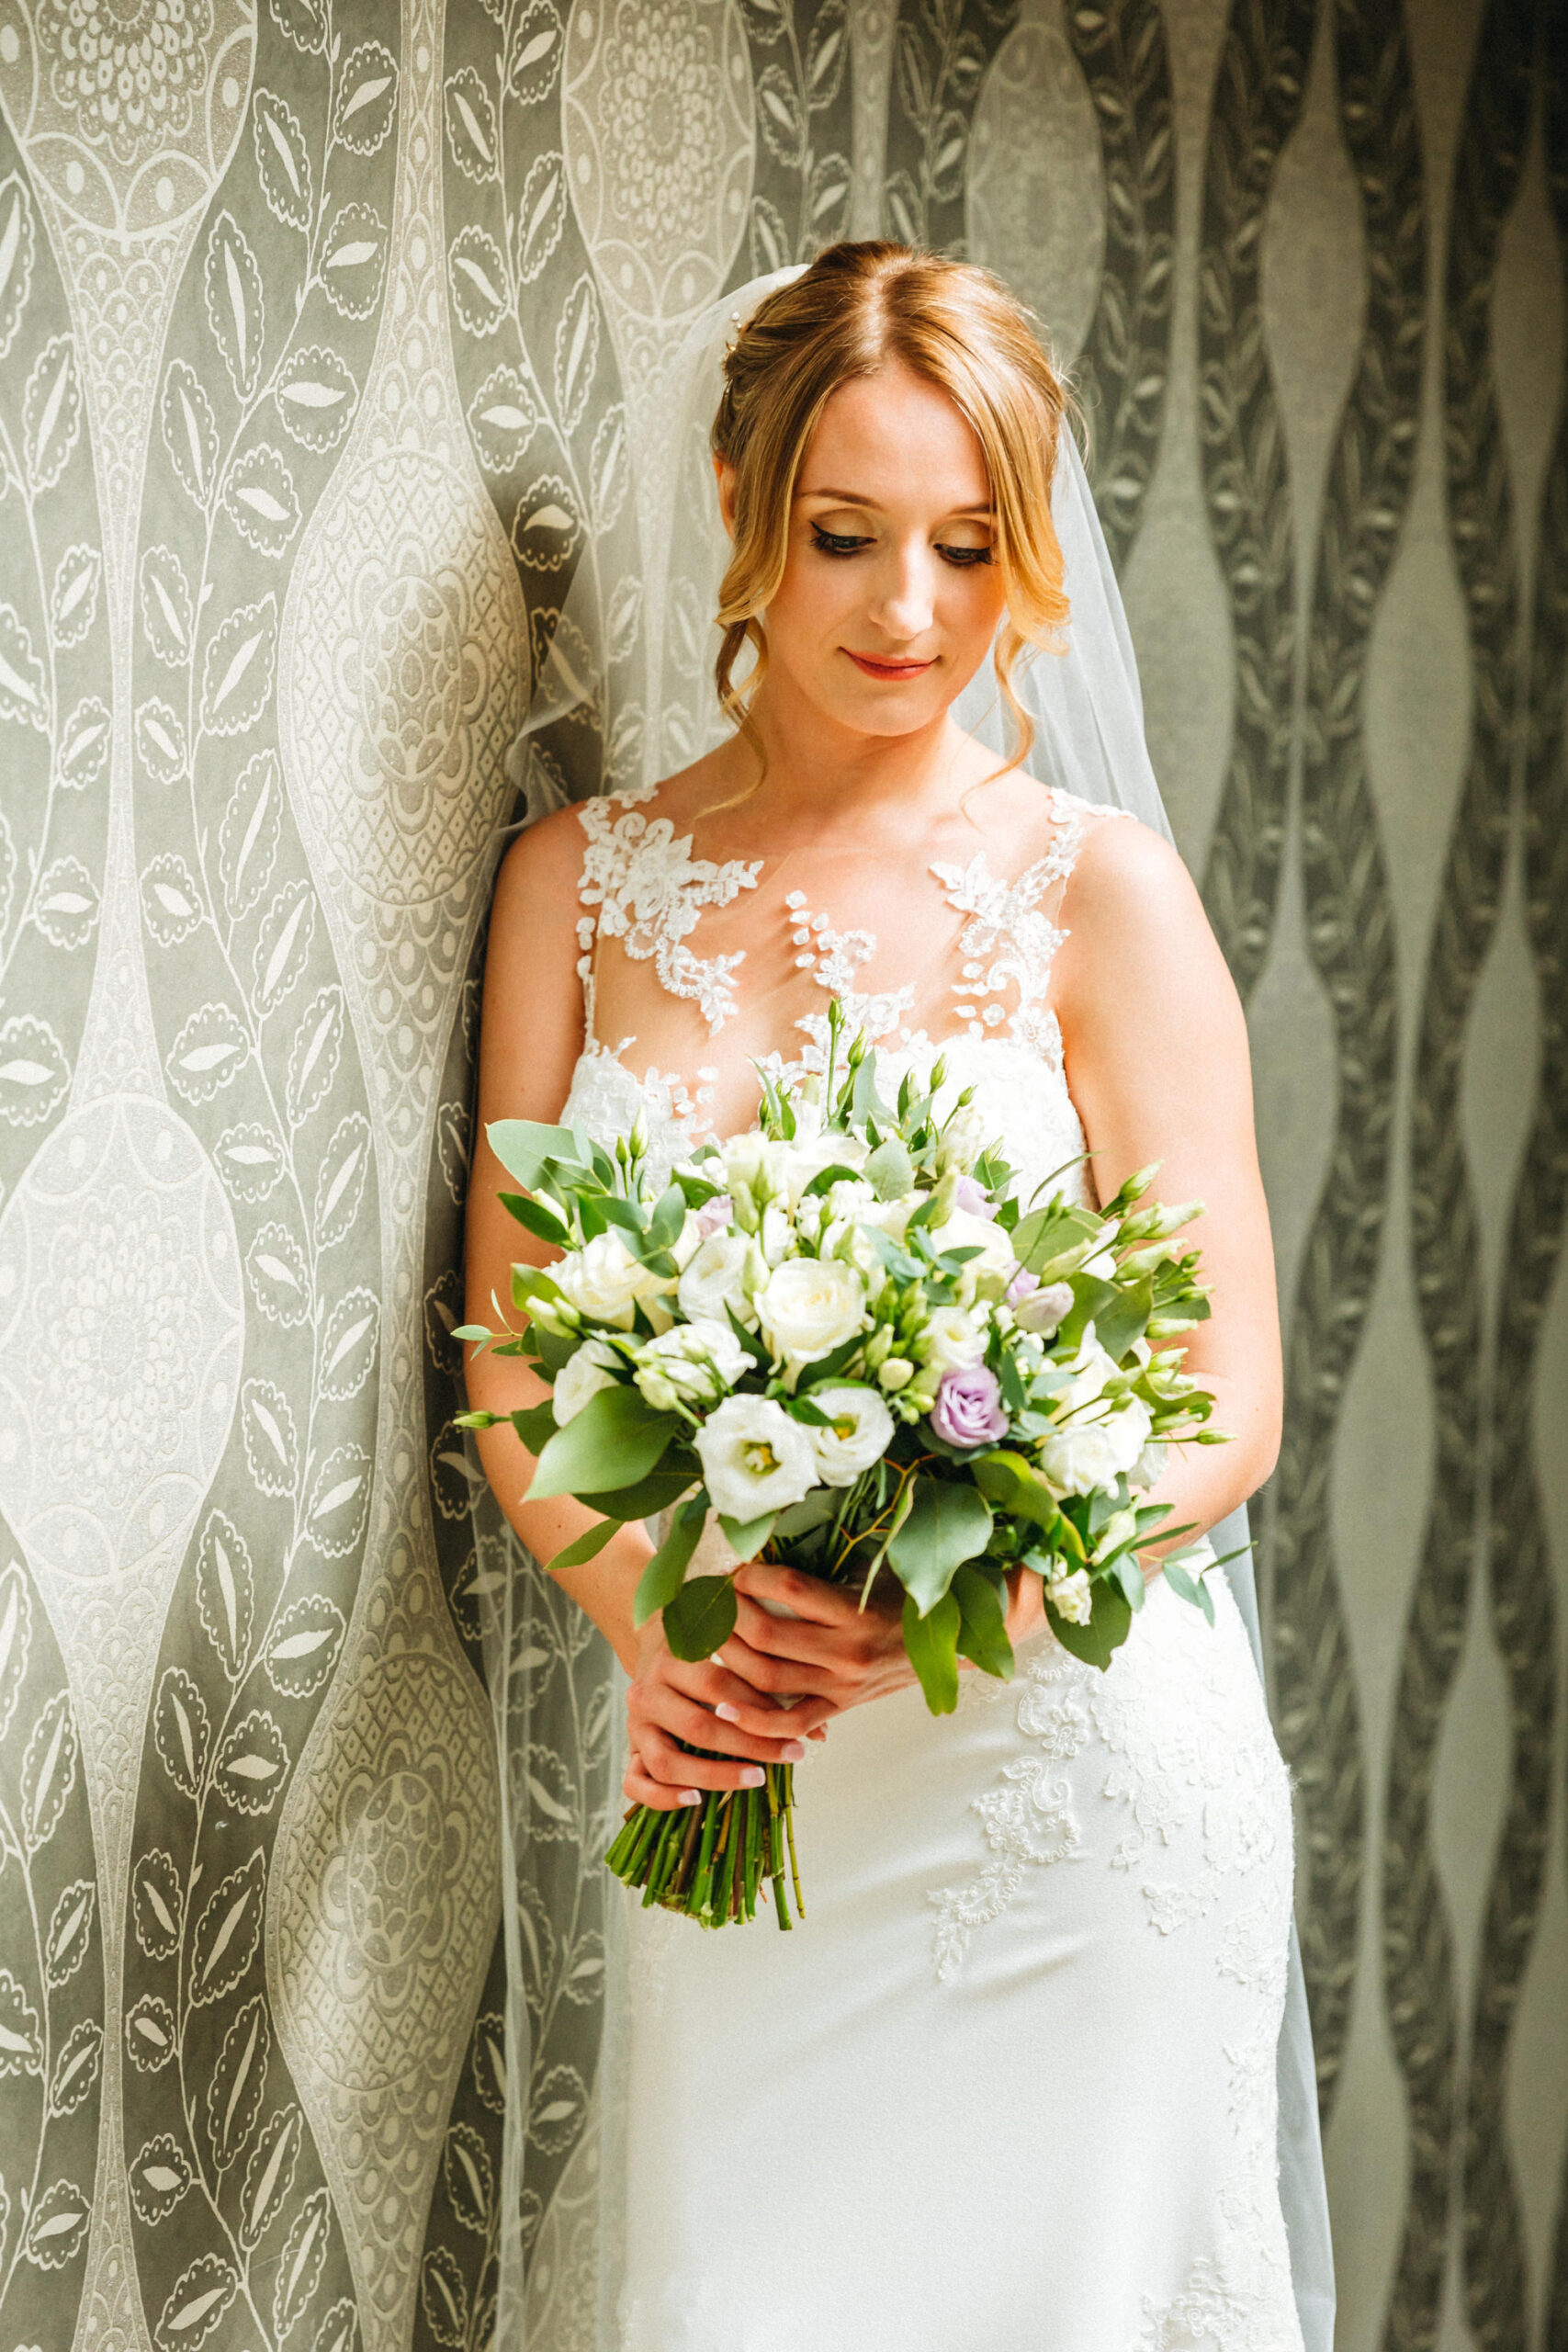 Rachel_Mike_Traditional-Wedding_Moritz-Schmittat-Photography_SBS_017